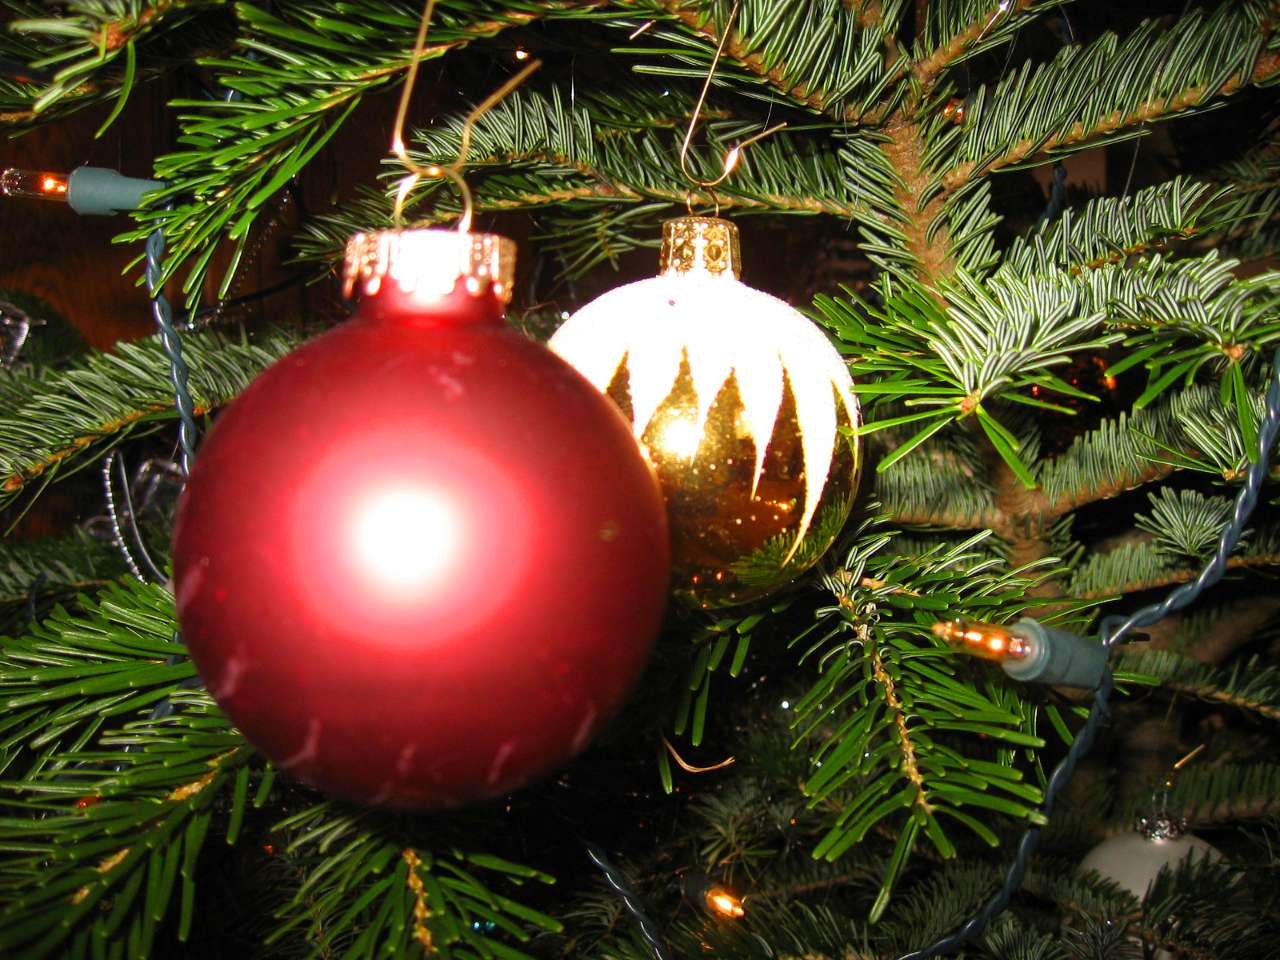 Christmas tree, Christmas tree decor, DIY decor, holiday decor, home decor, DIY home decor, popular pin.